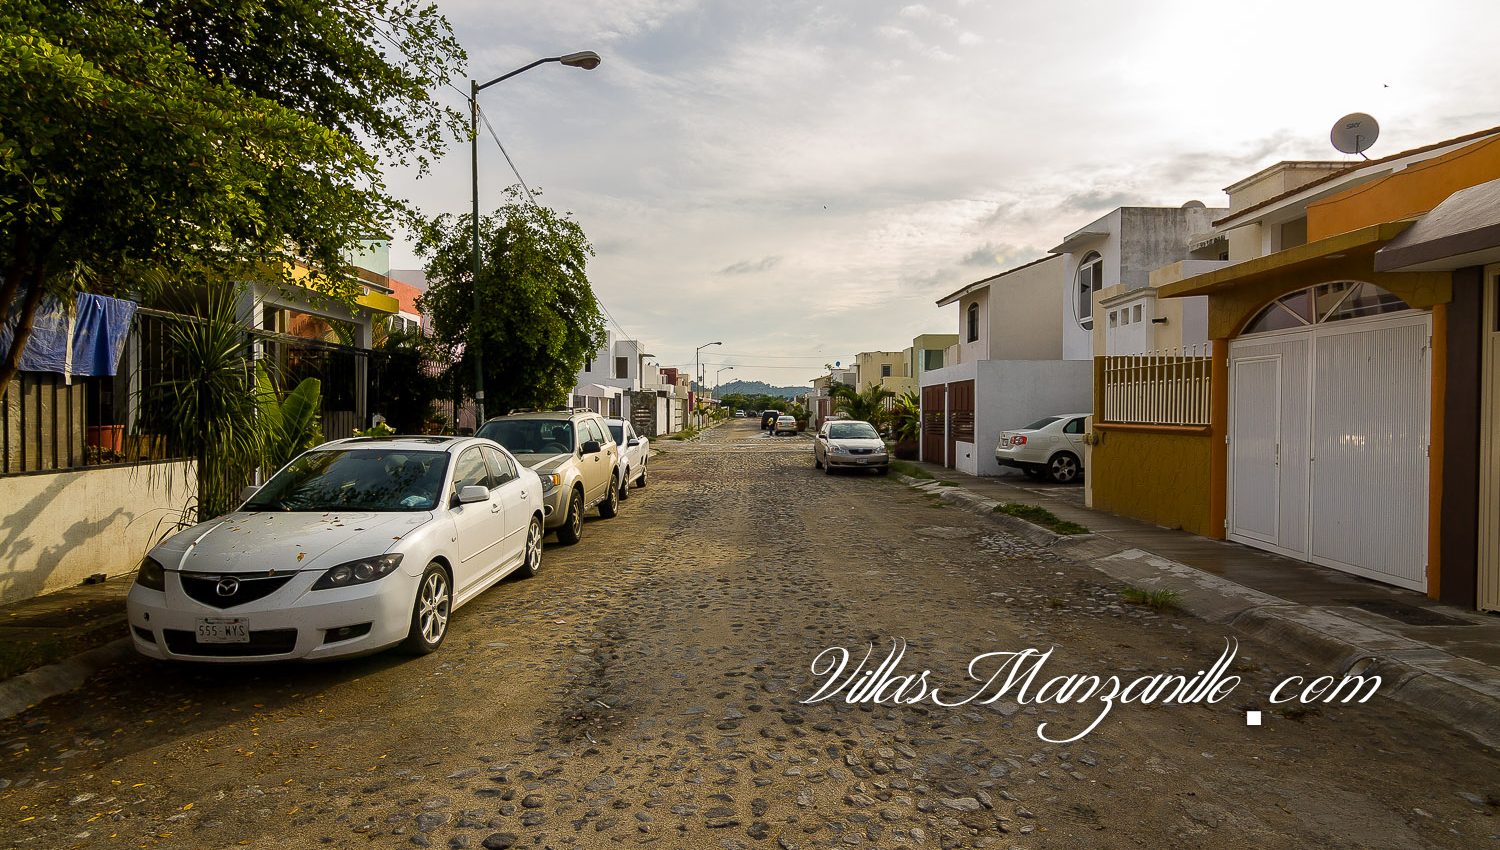 Se Renta For Rent Se Vende For Sale Casa en Villas del Pacifico Manzanillo Colima Mexico Casa Tiburon-14